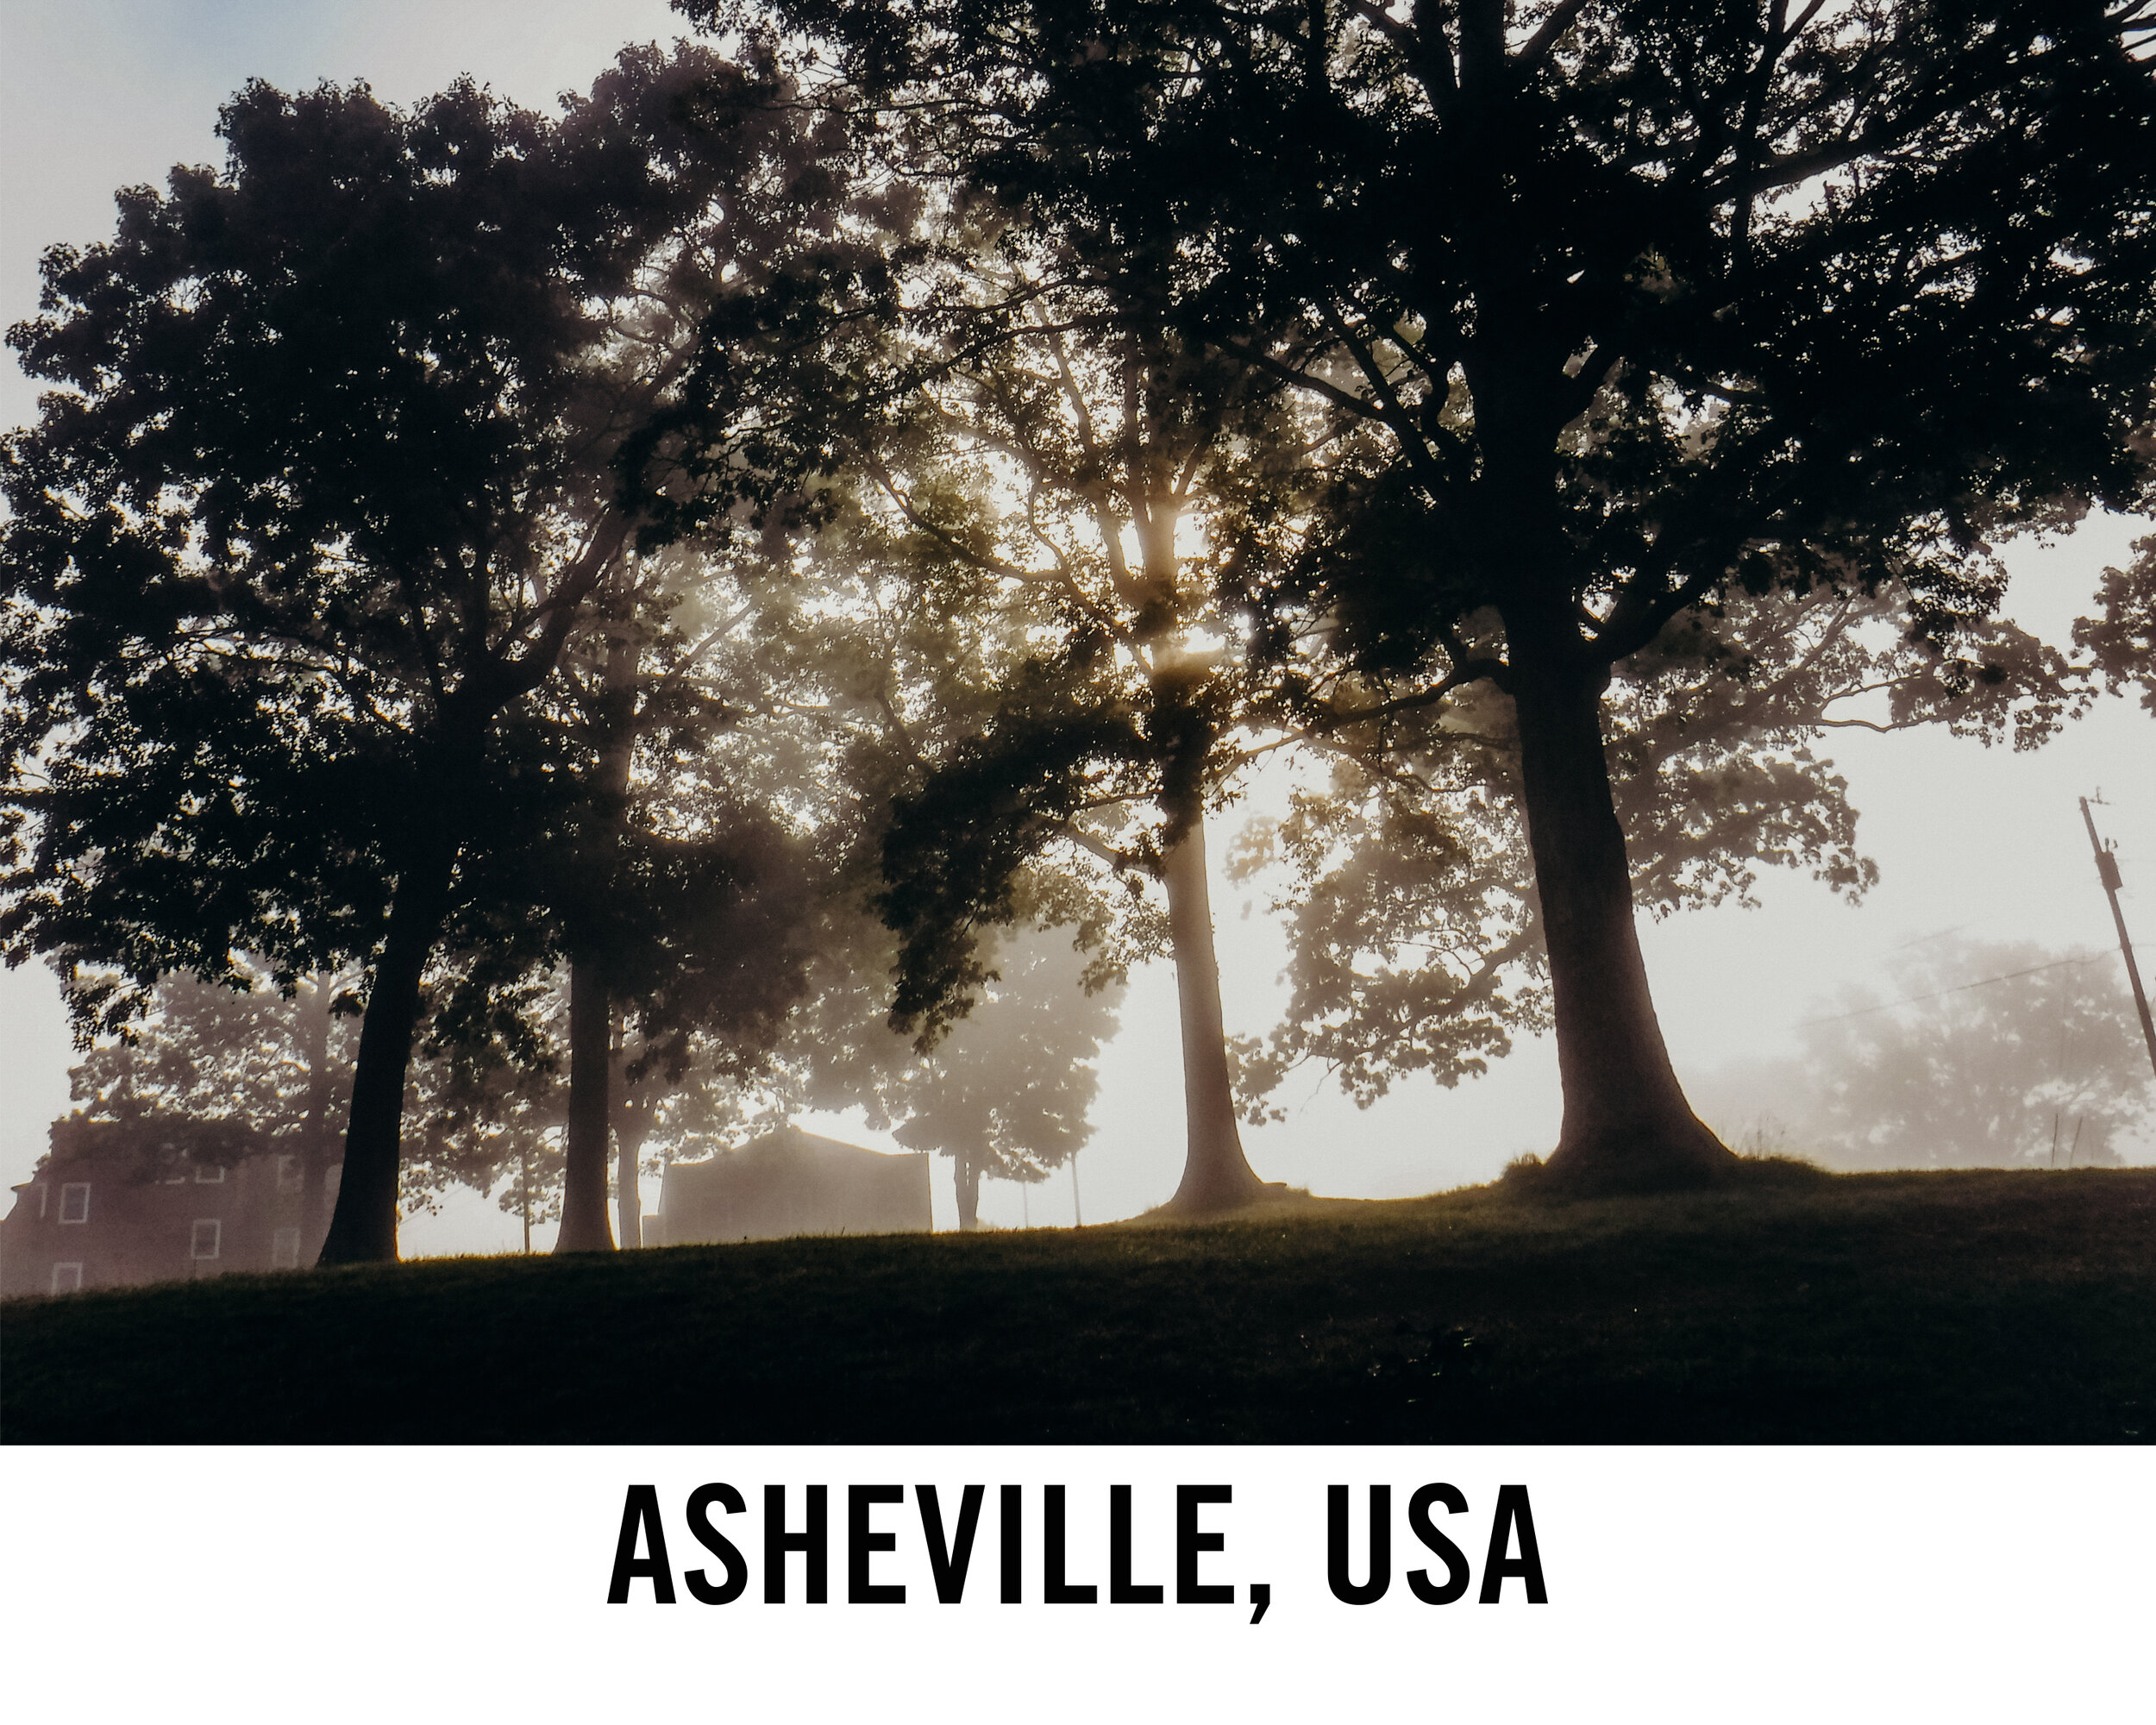 Asheville web graphic.jpg